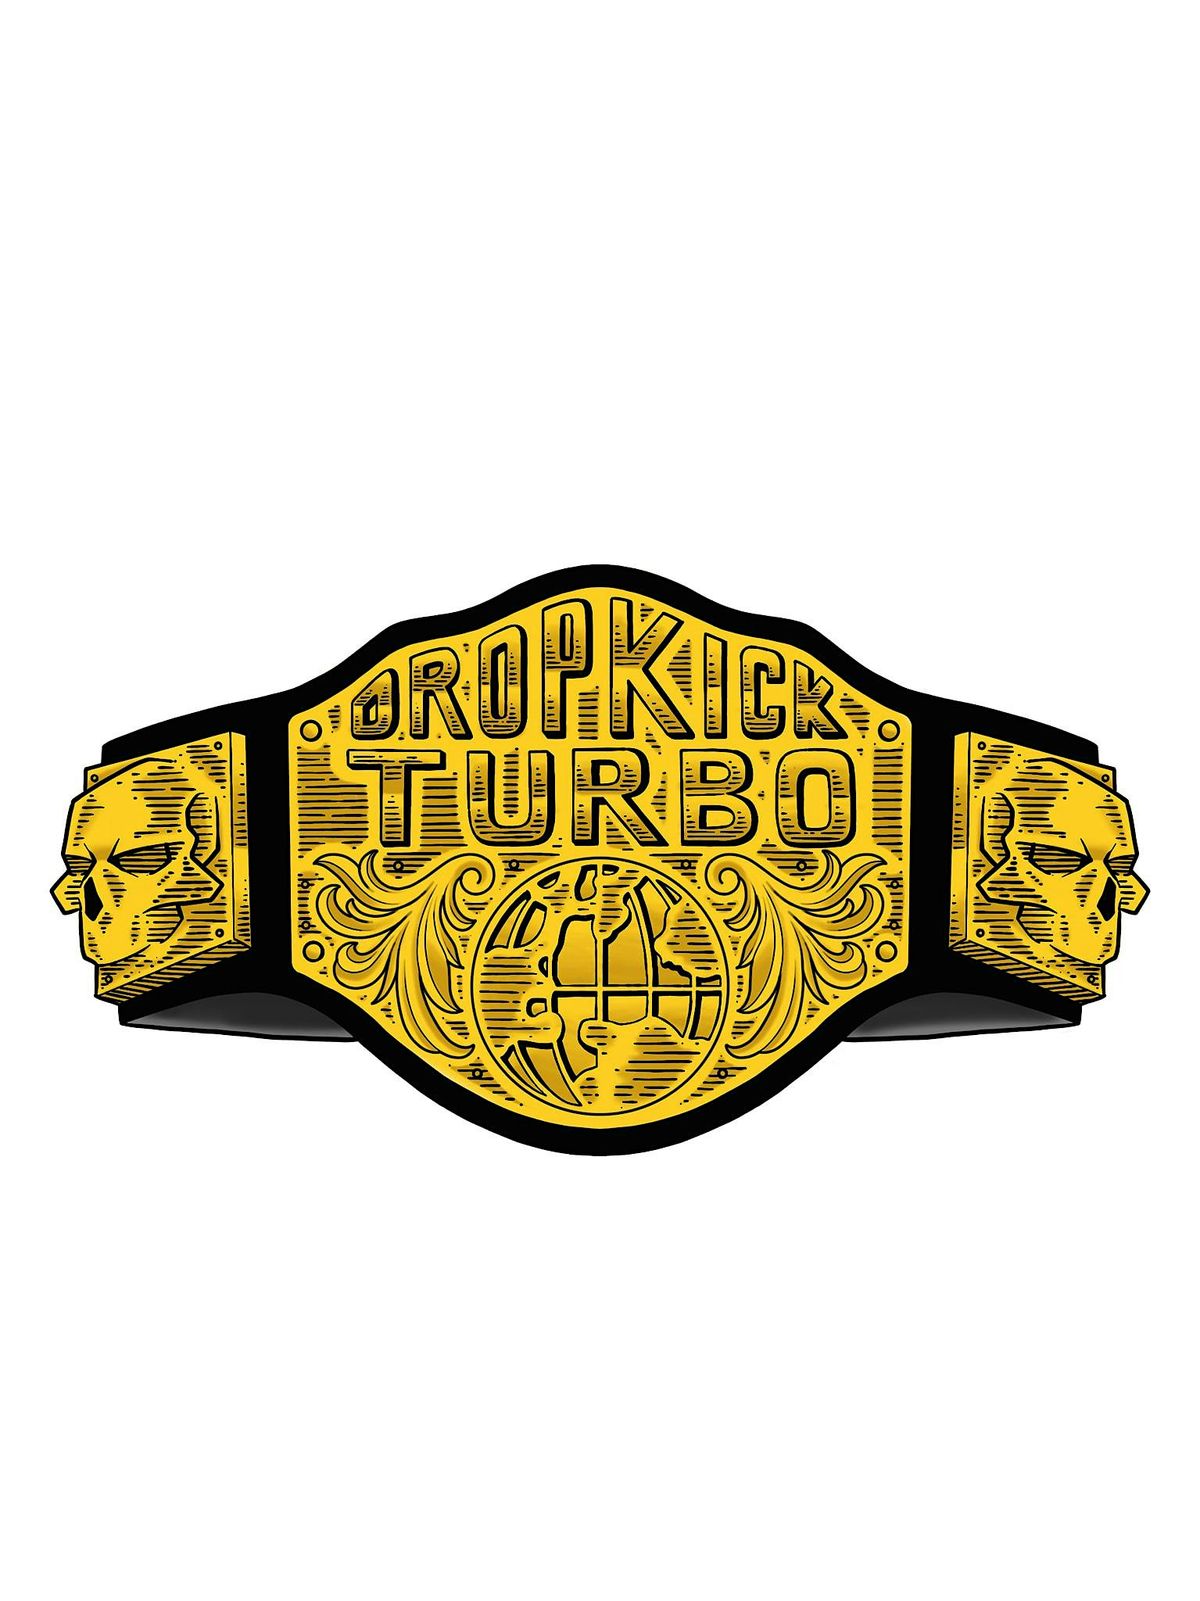 DropKick Turbo @ Coach's Corner!